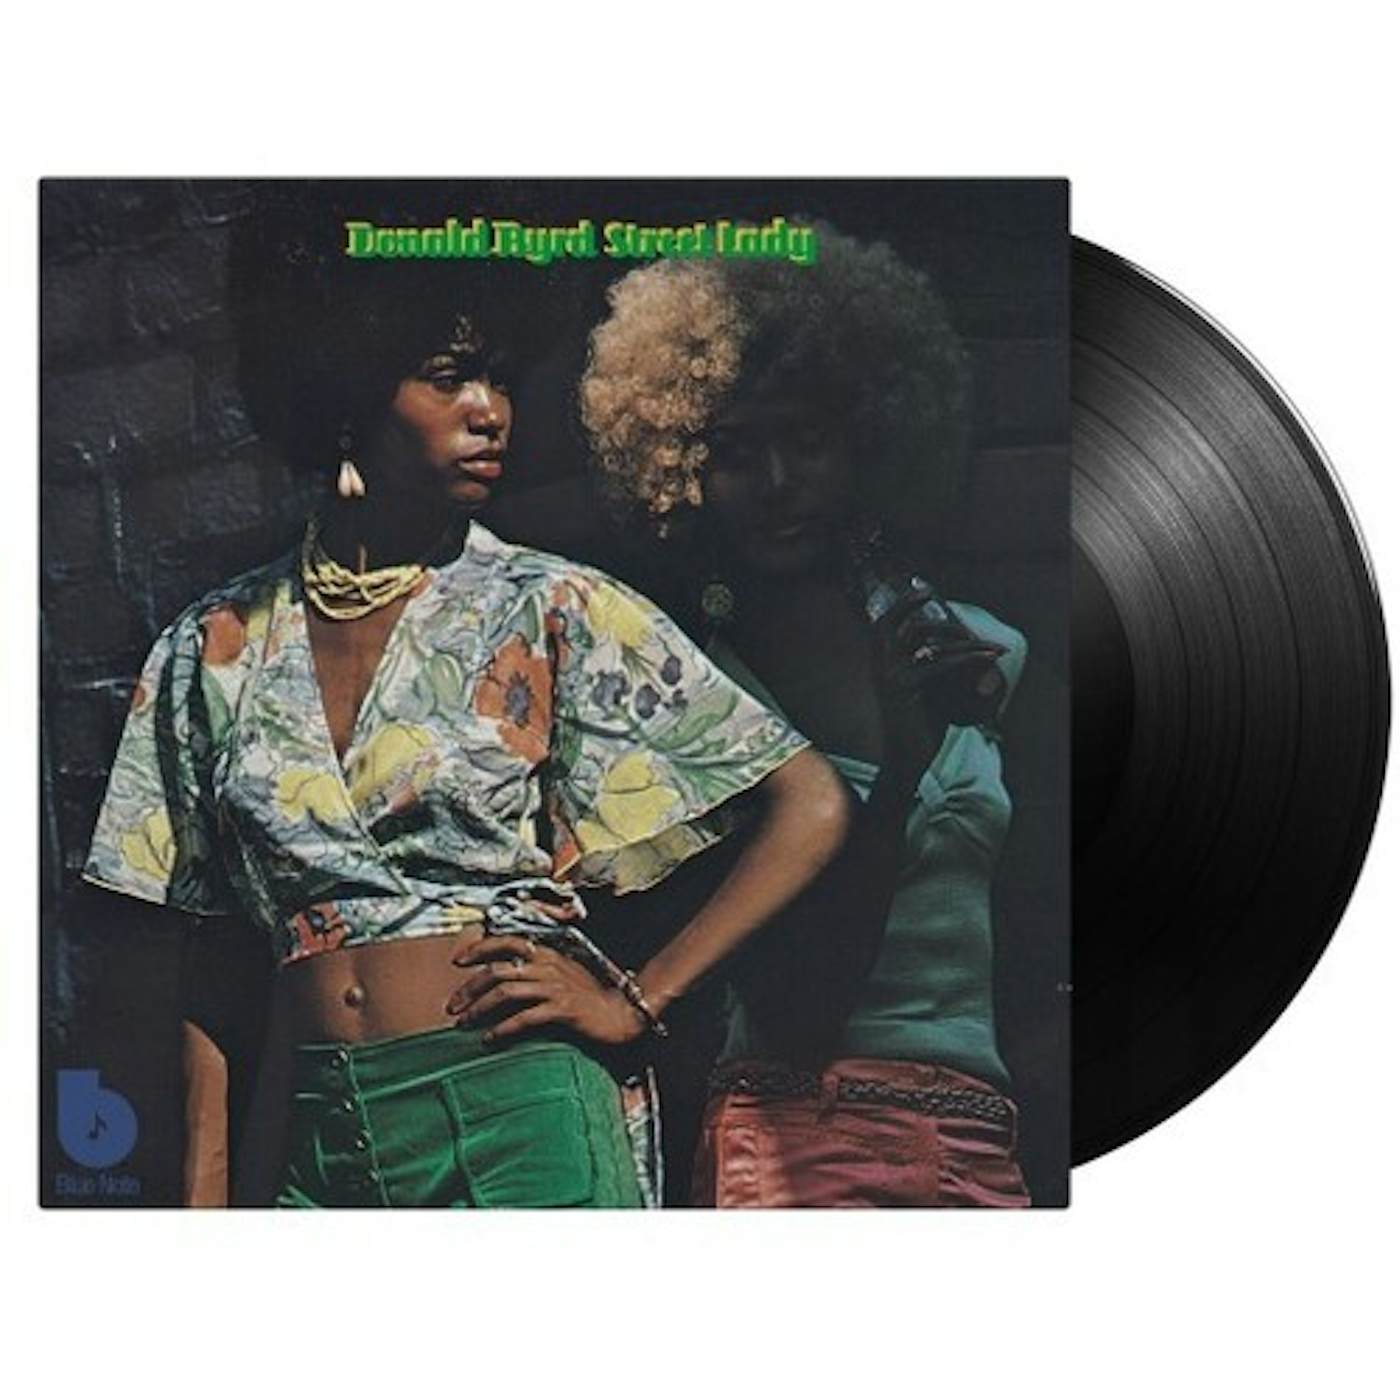 Donald Byrd Street Lady Vinyl Record